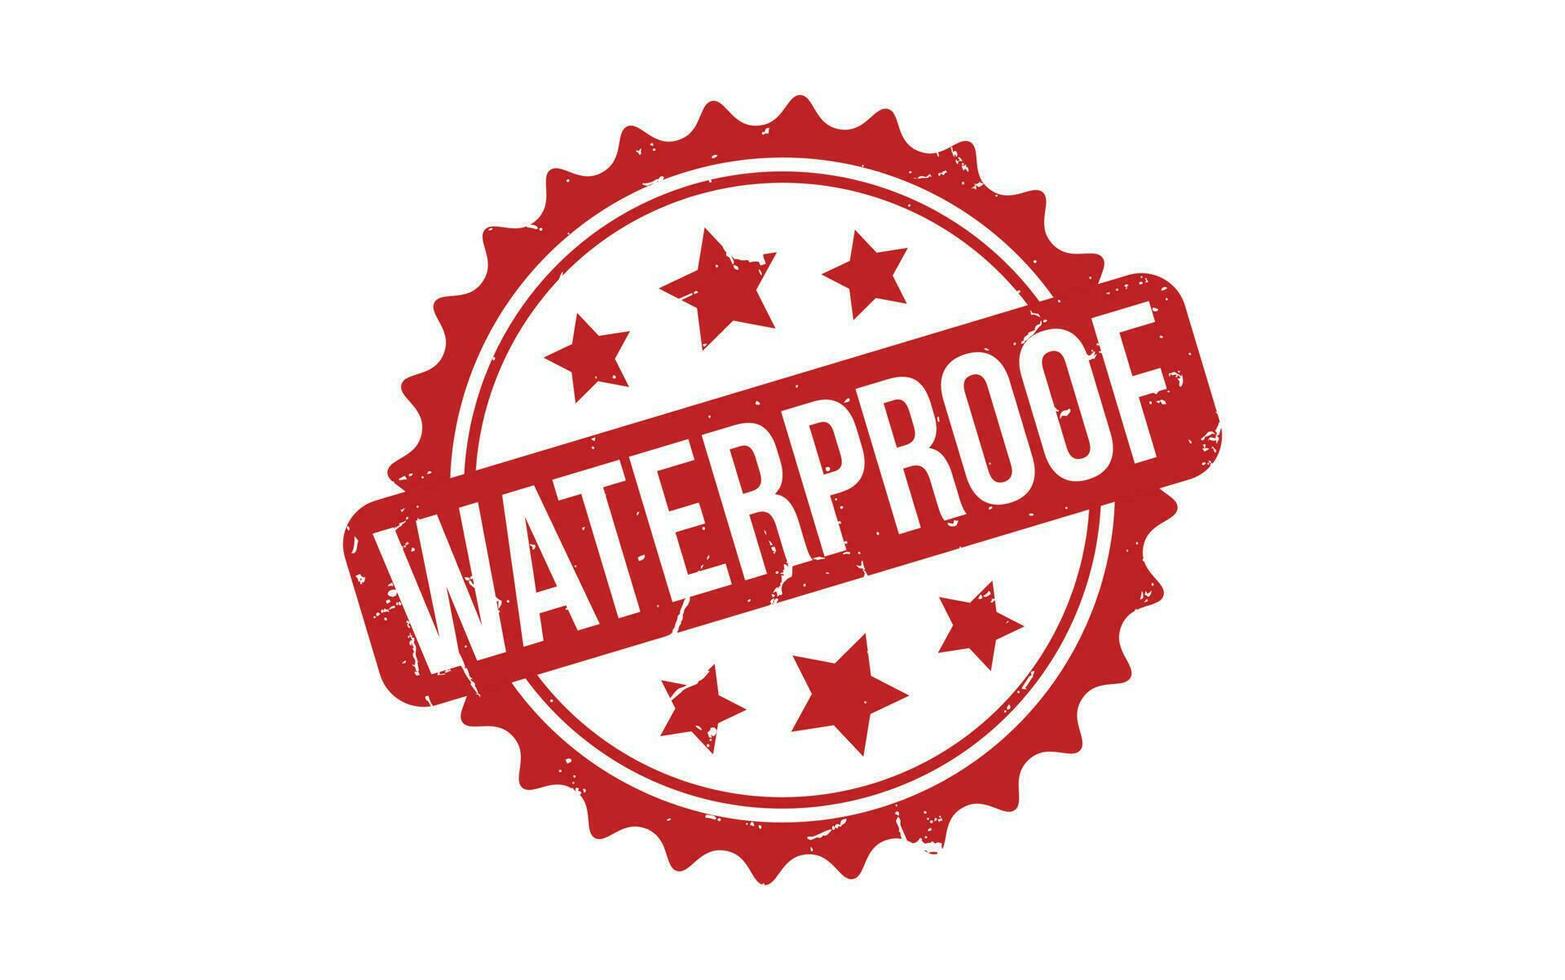 Waterproof rubber grunge stamp seal vector